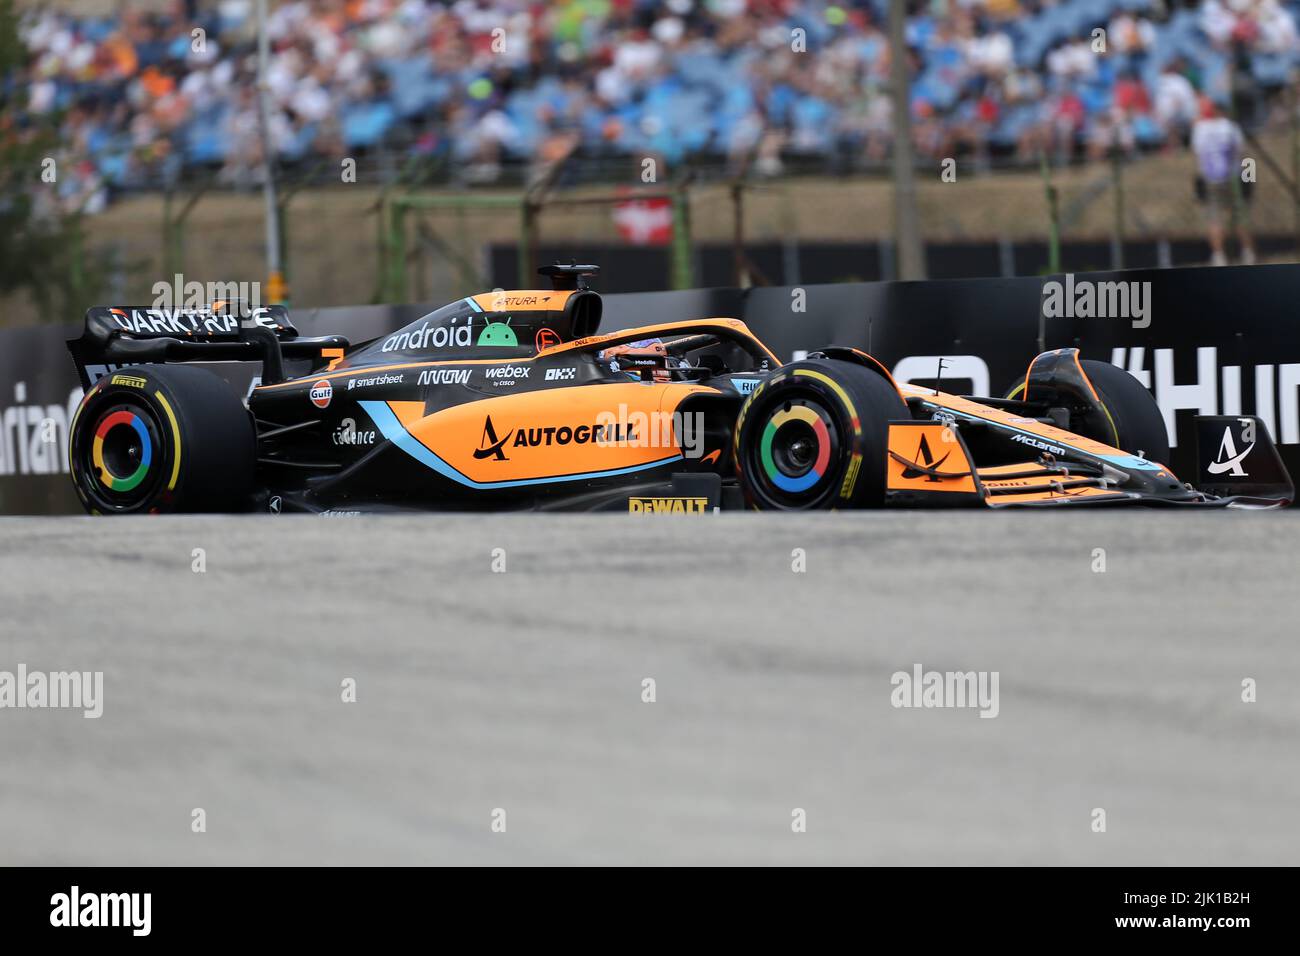 Daniel Ricciardo of McLaren on track during free practice 1 ahead of the F1 Grand Prix of Hungary Stock Photo